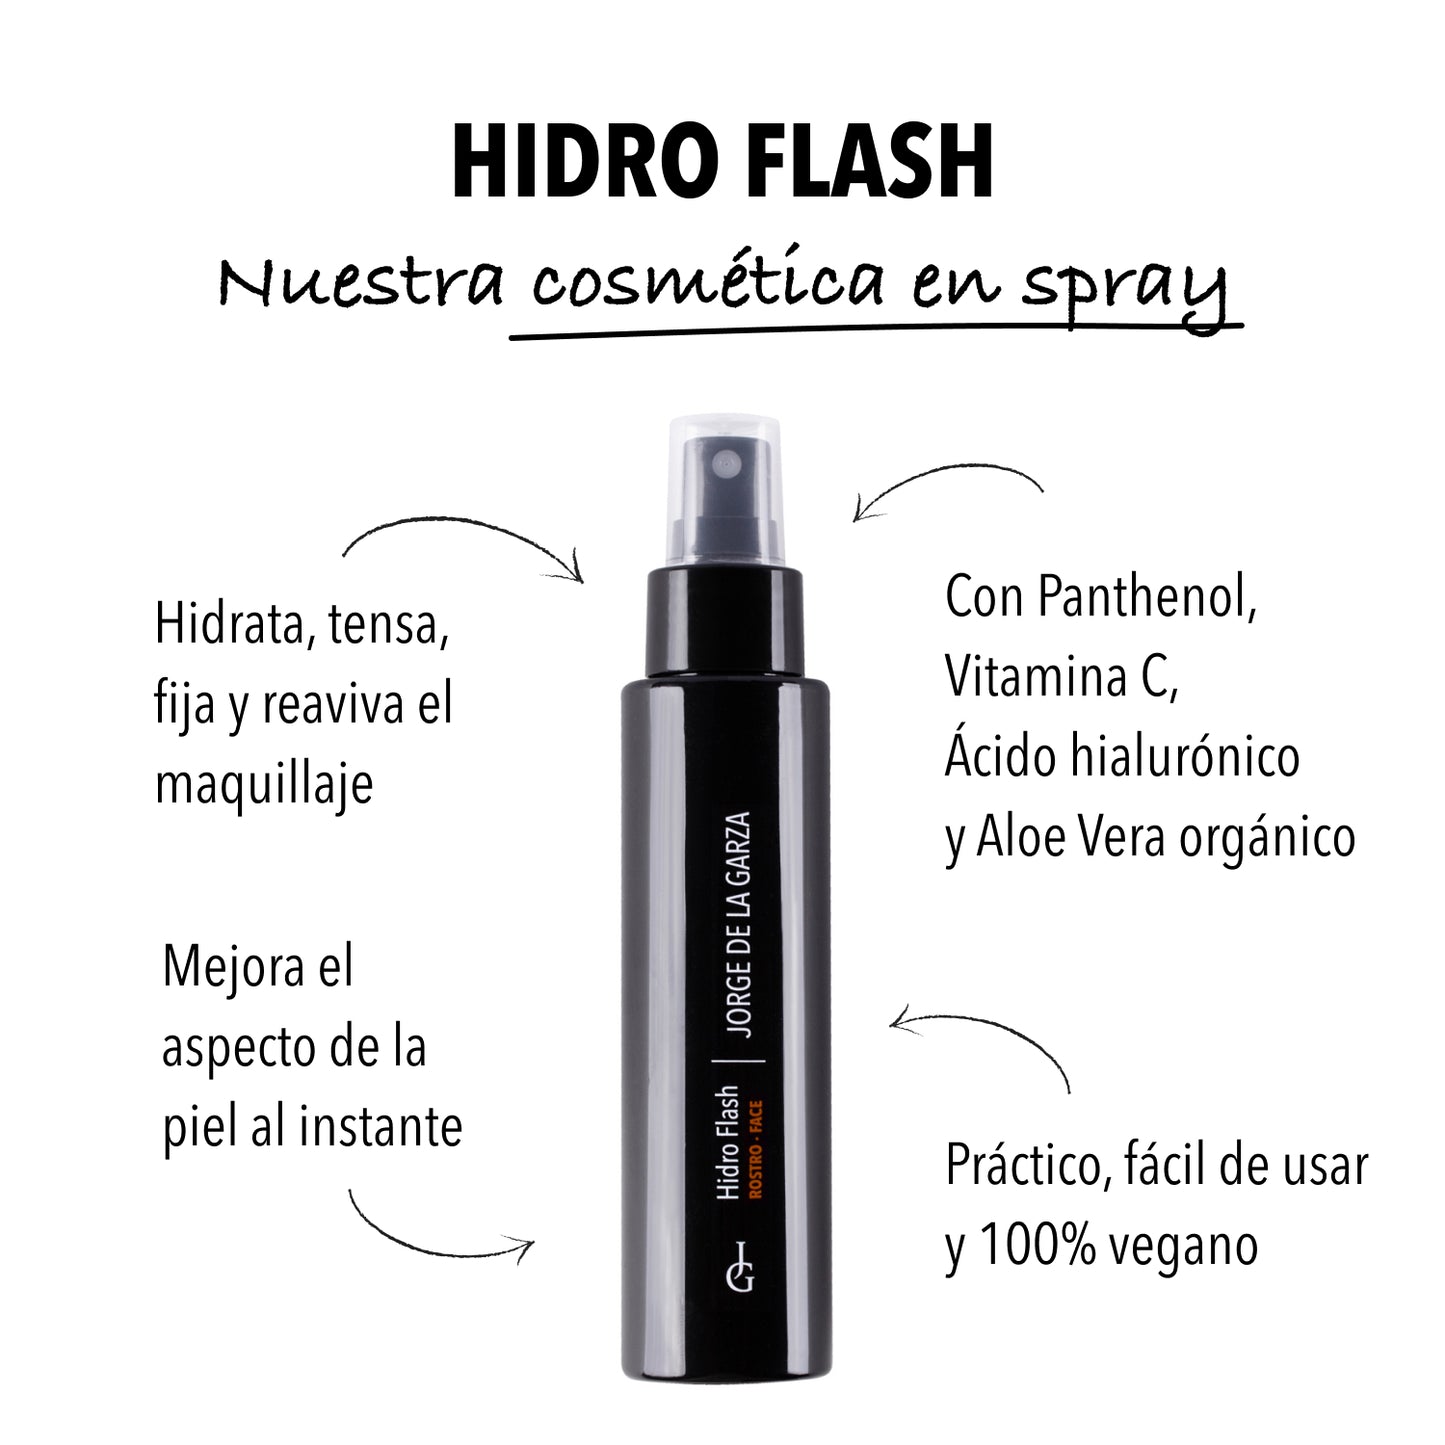 Hidro Flash